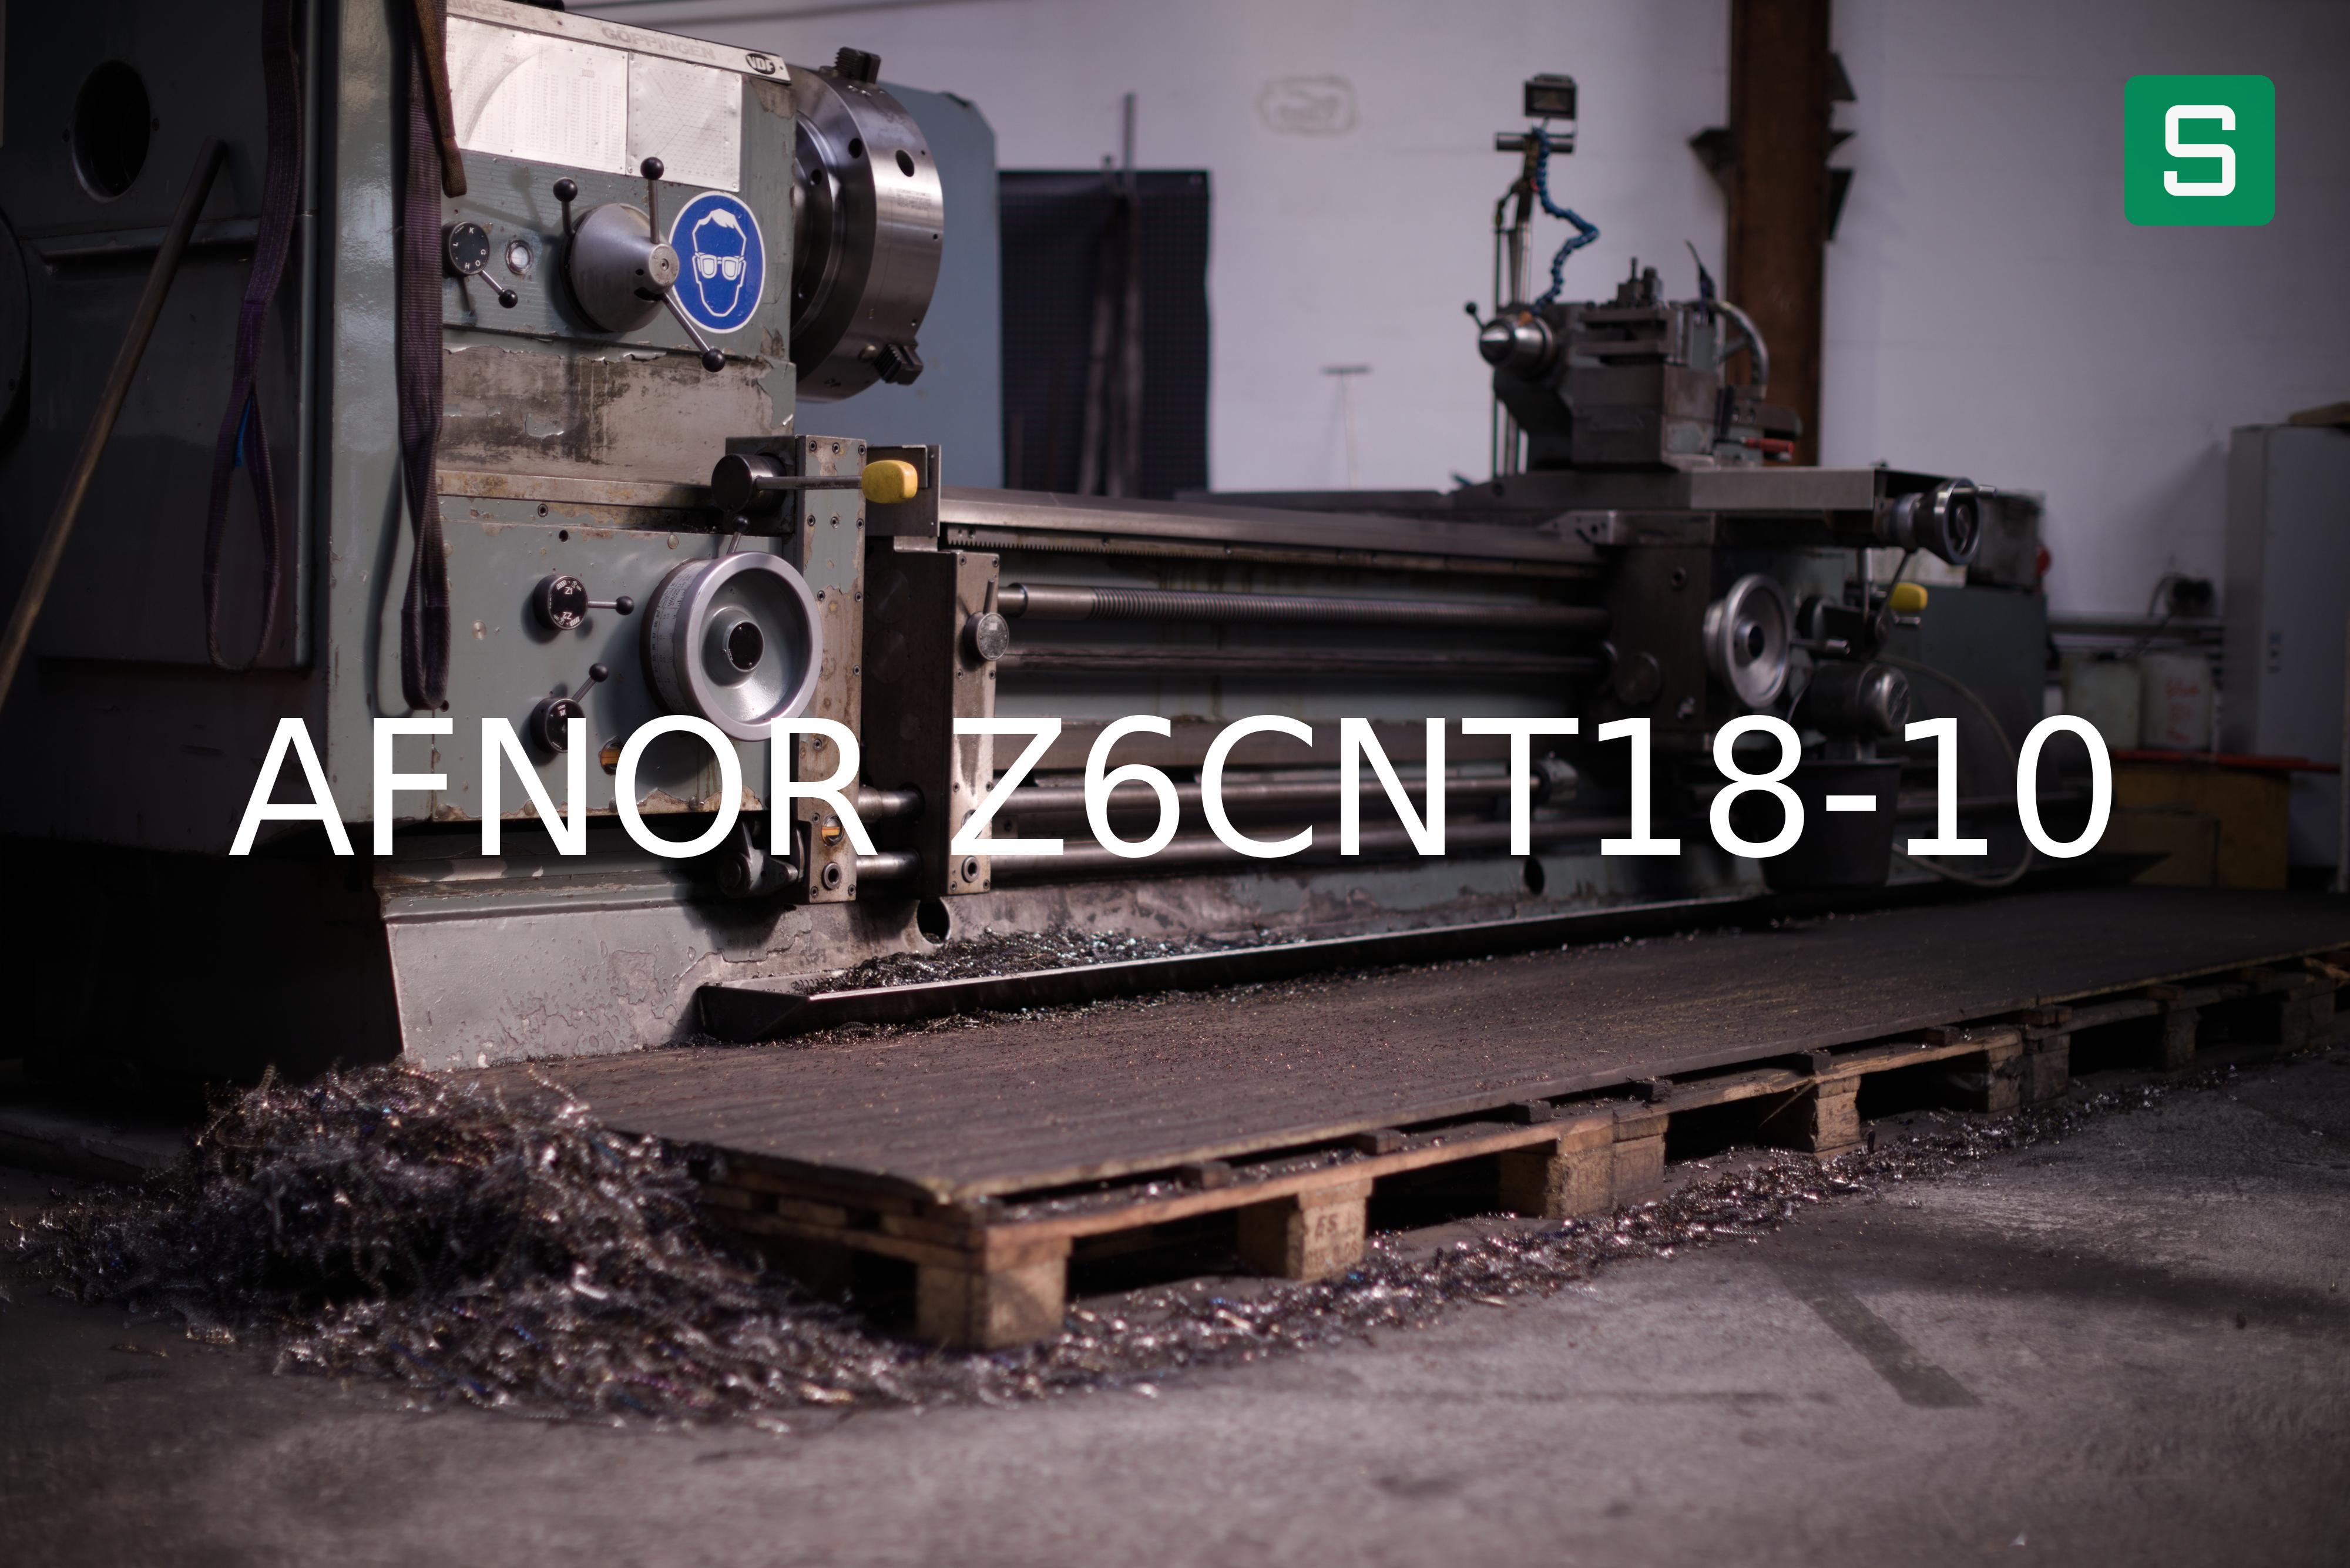 Steel Material: AFNOR Z6CNT18-10